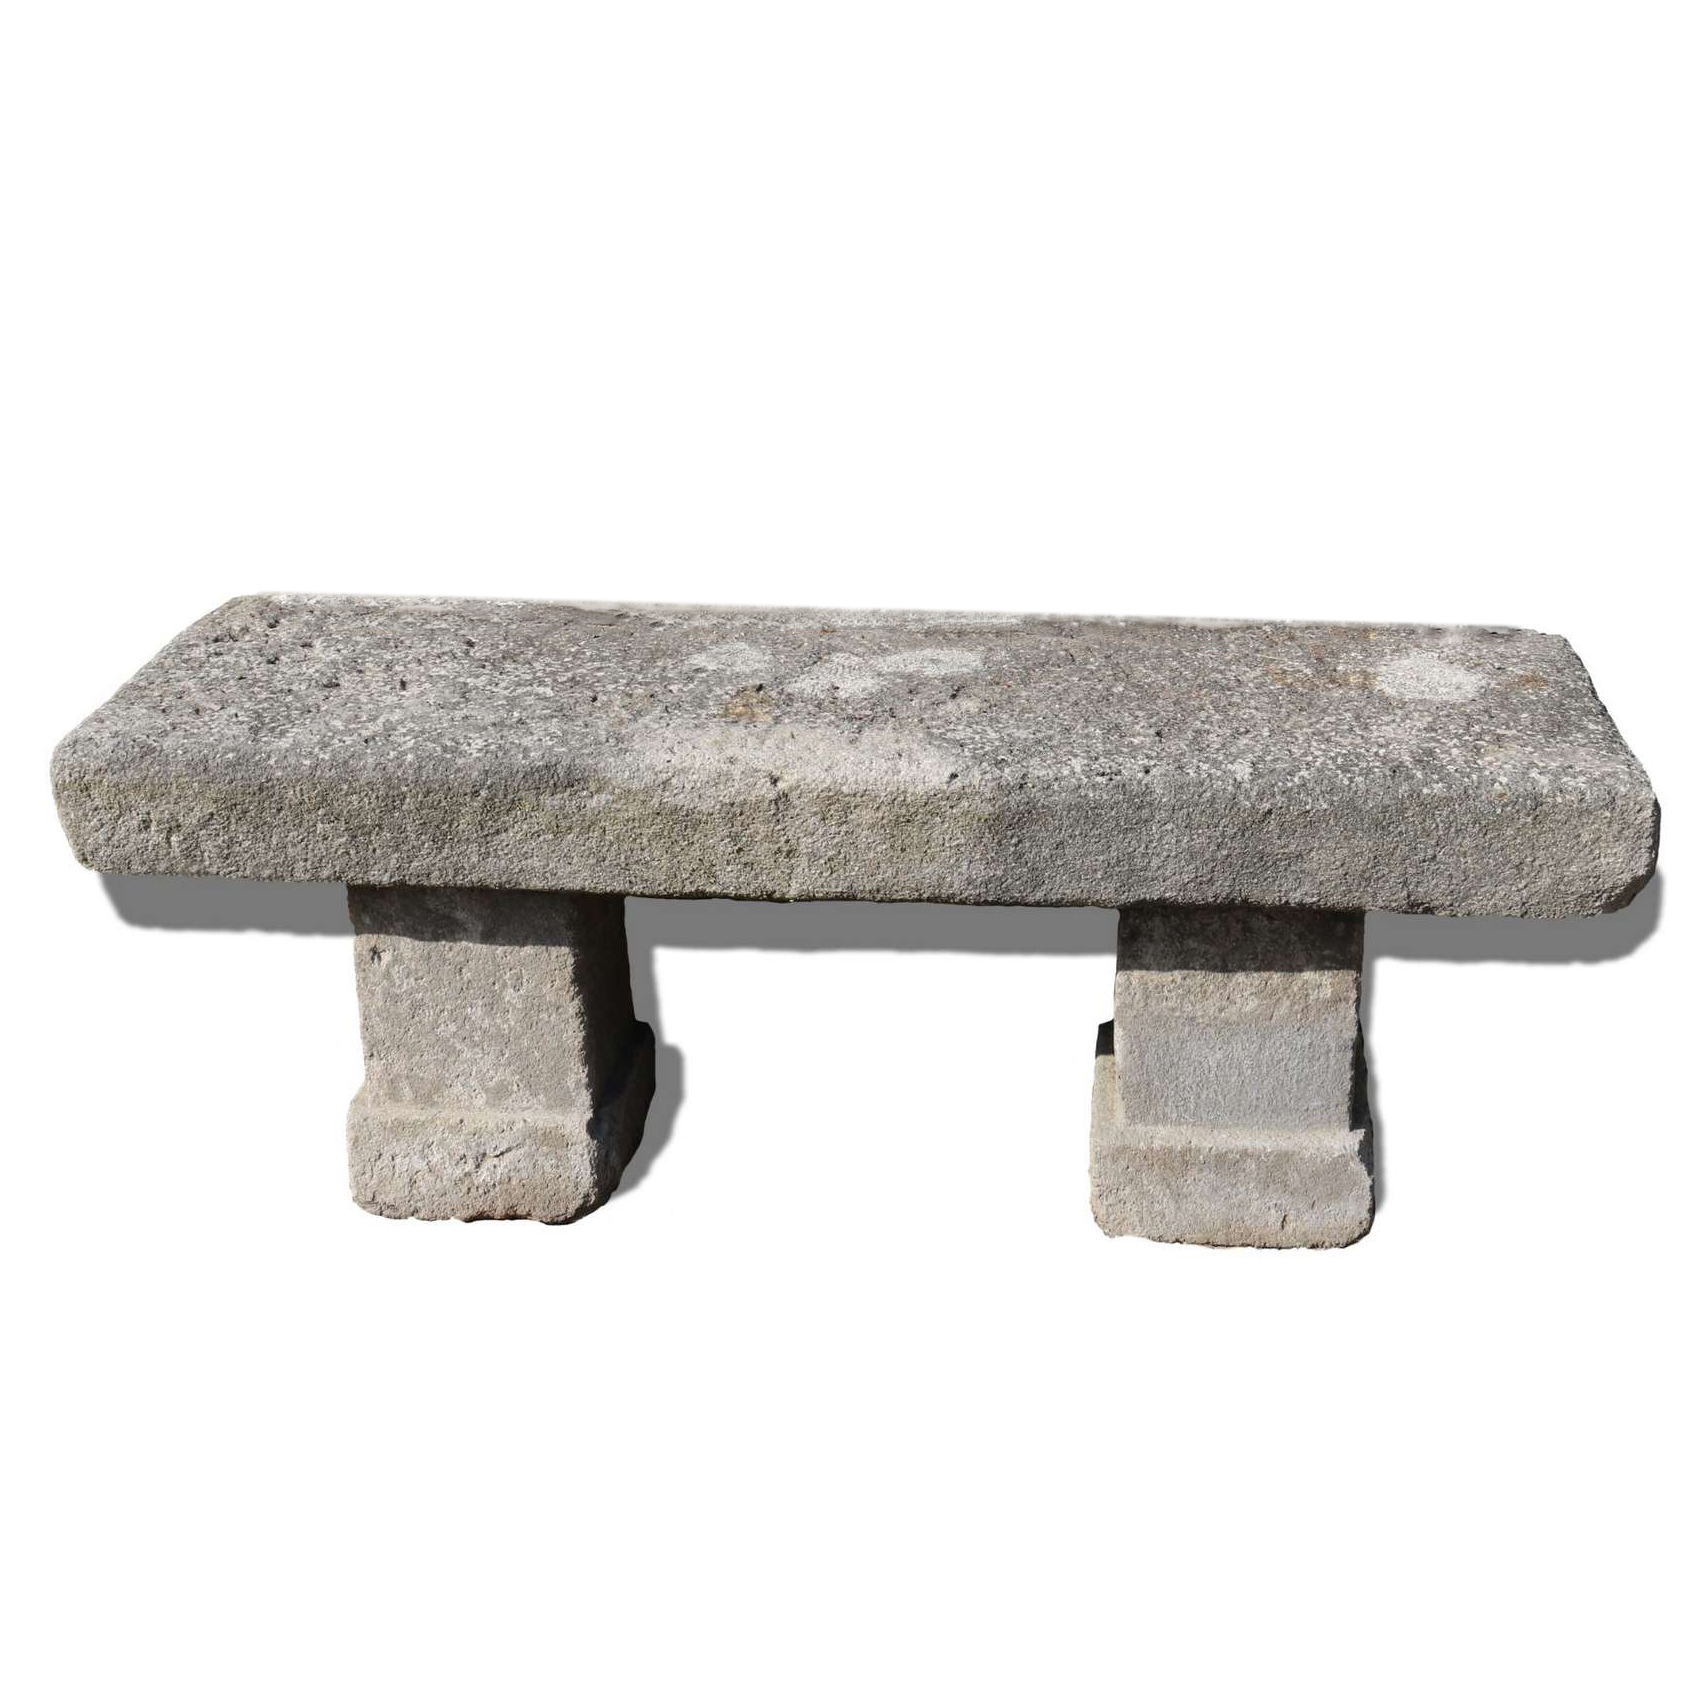 Antica panchina in pietra. Epoca 1800. - 1